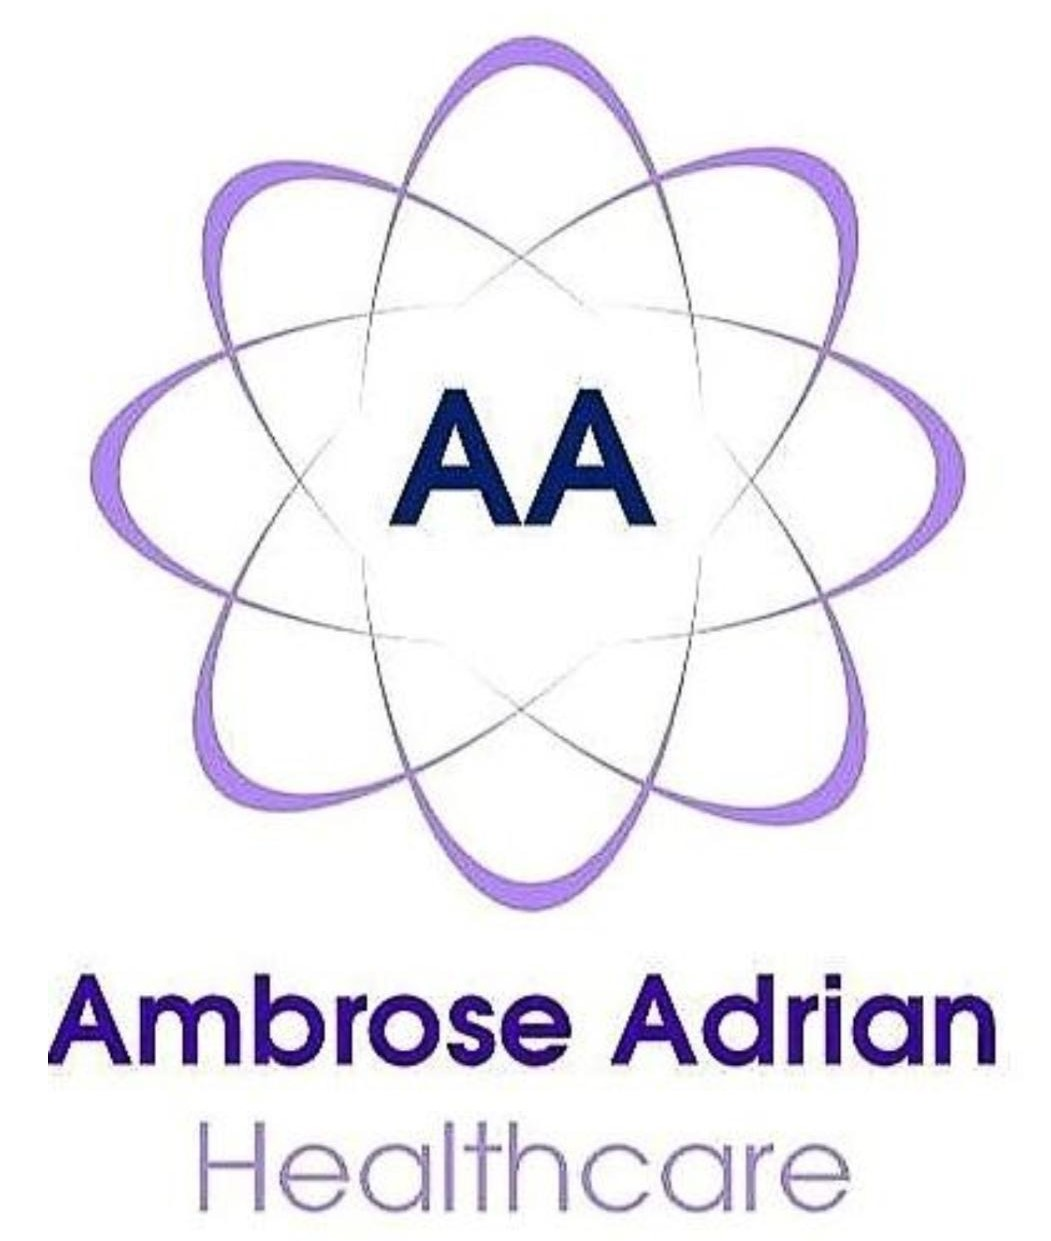 Ambrose Adrian Healthcare